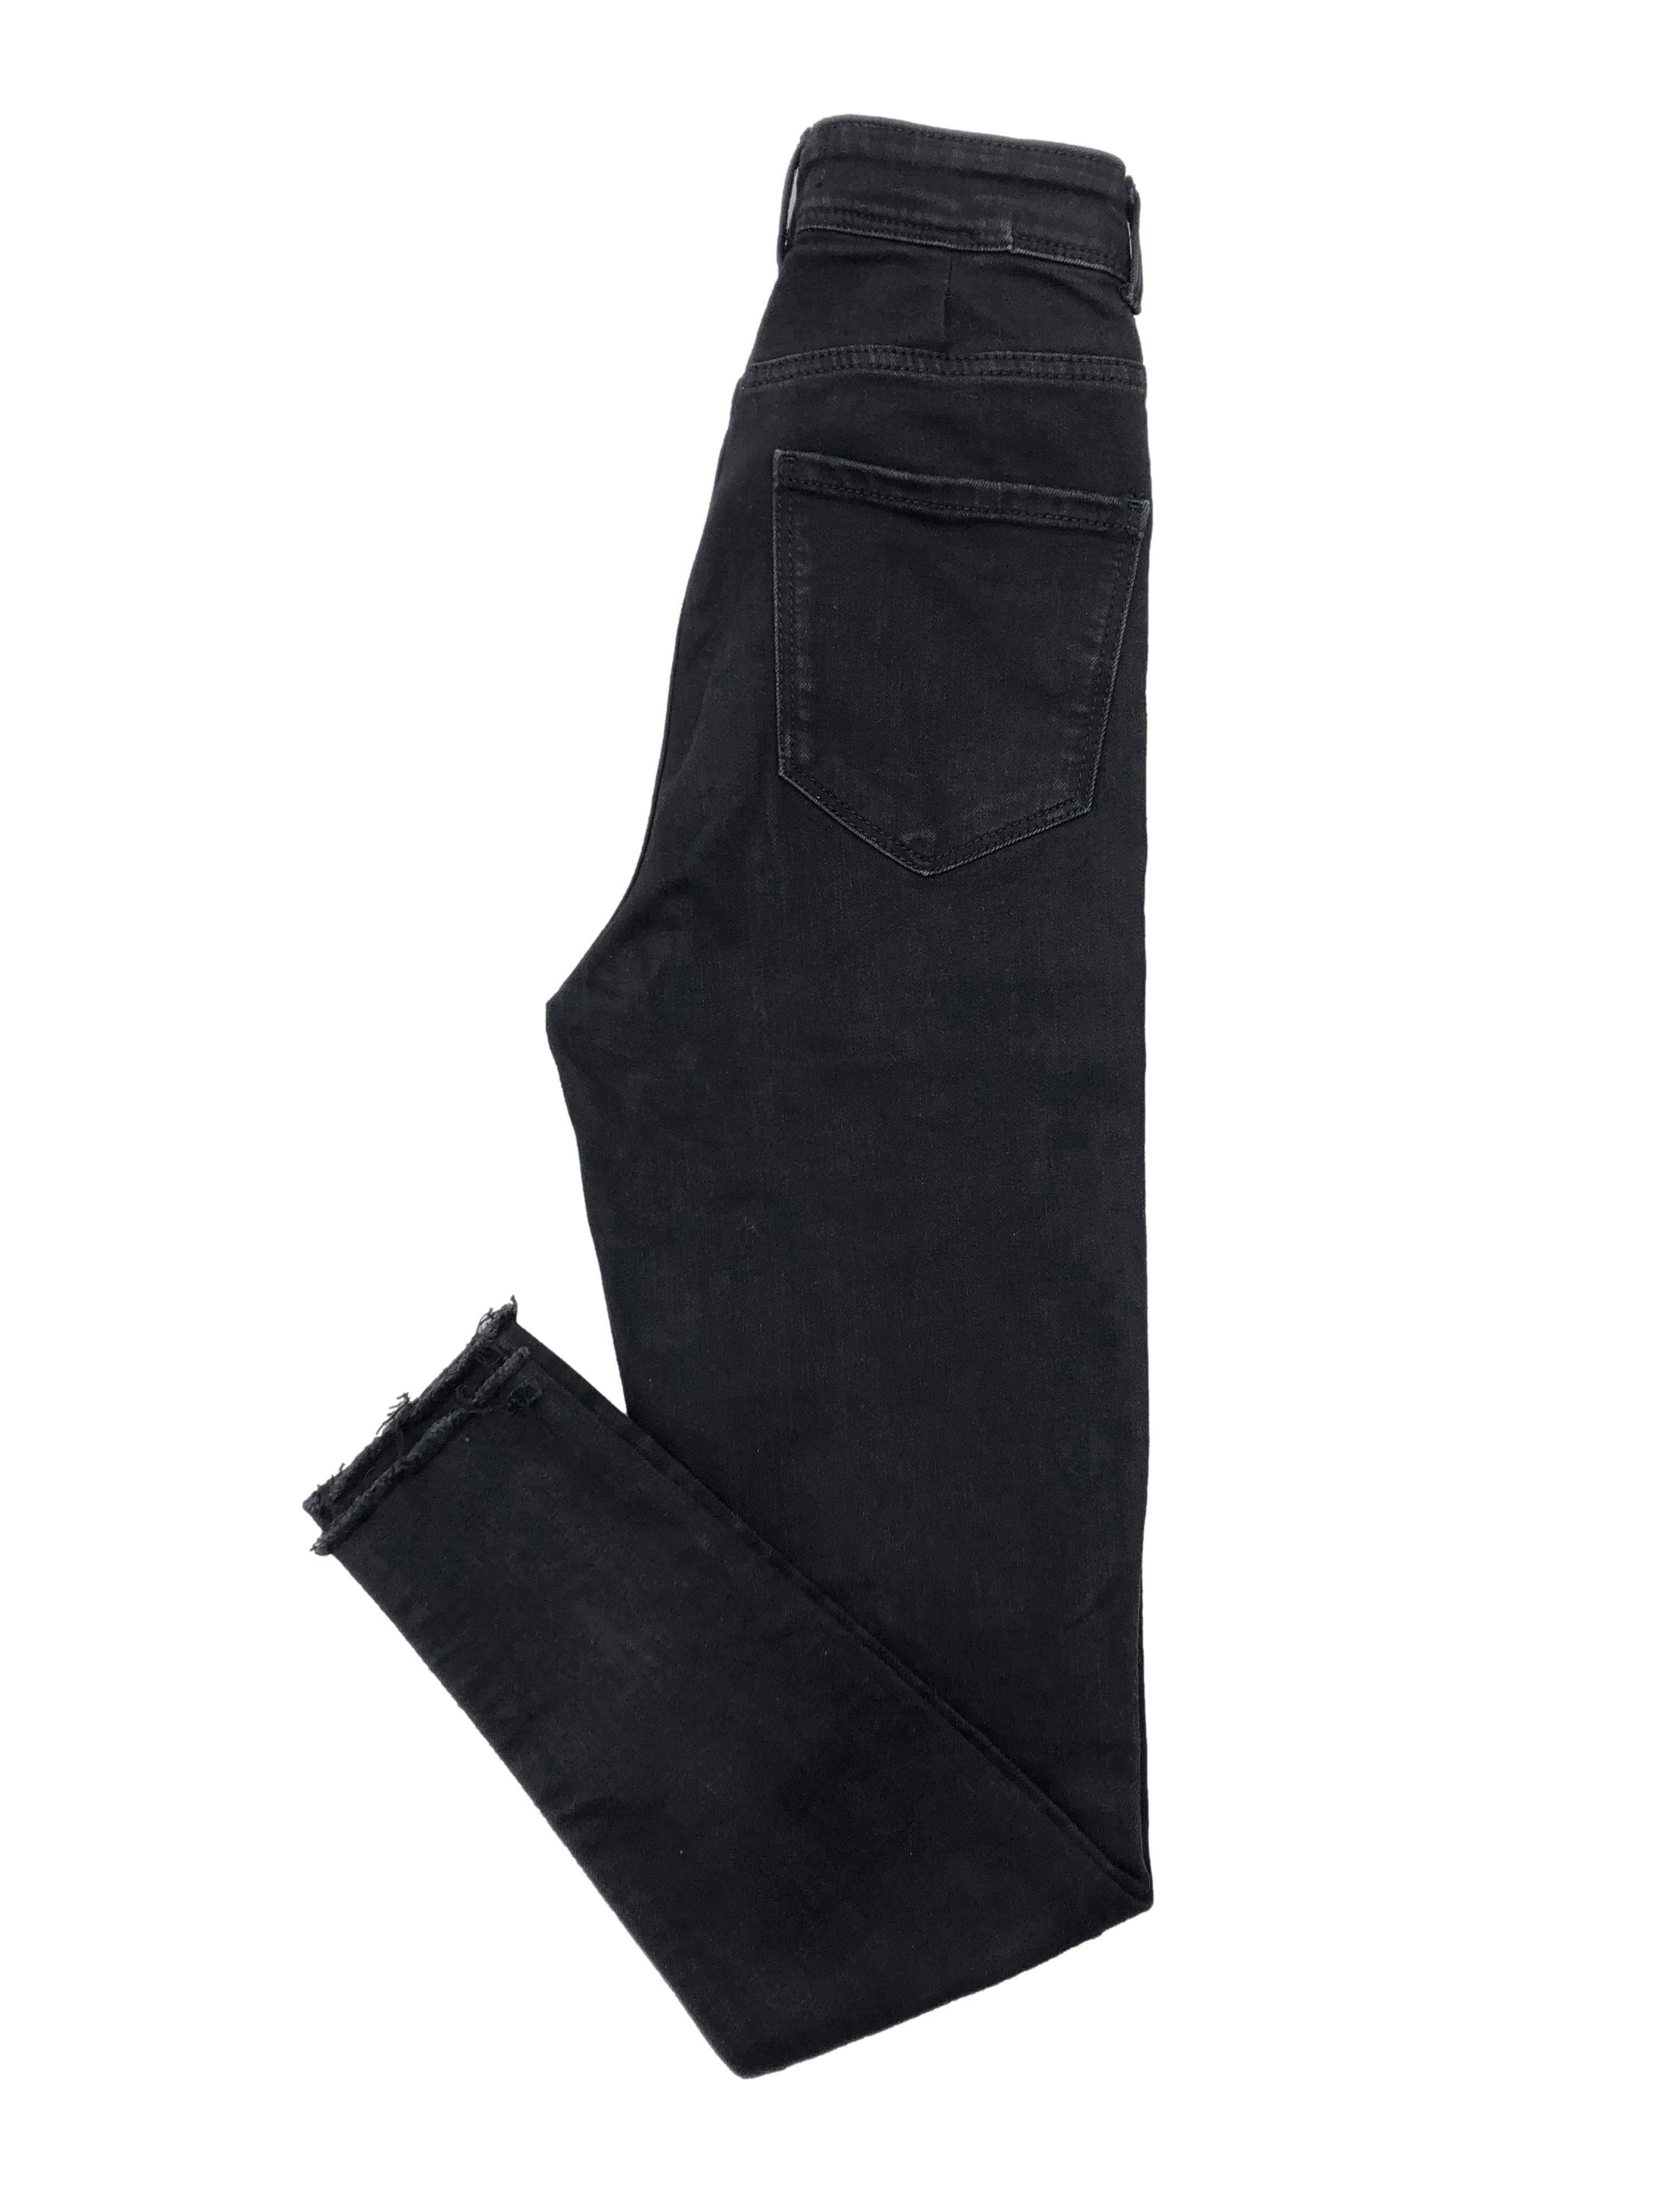 Skinny jean Zara negro efecto lavado, aberturas en rodillas. Cintura 62cm Tiro 27cm Largo 98cm